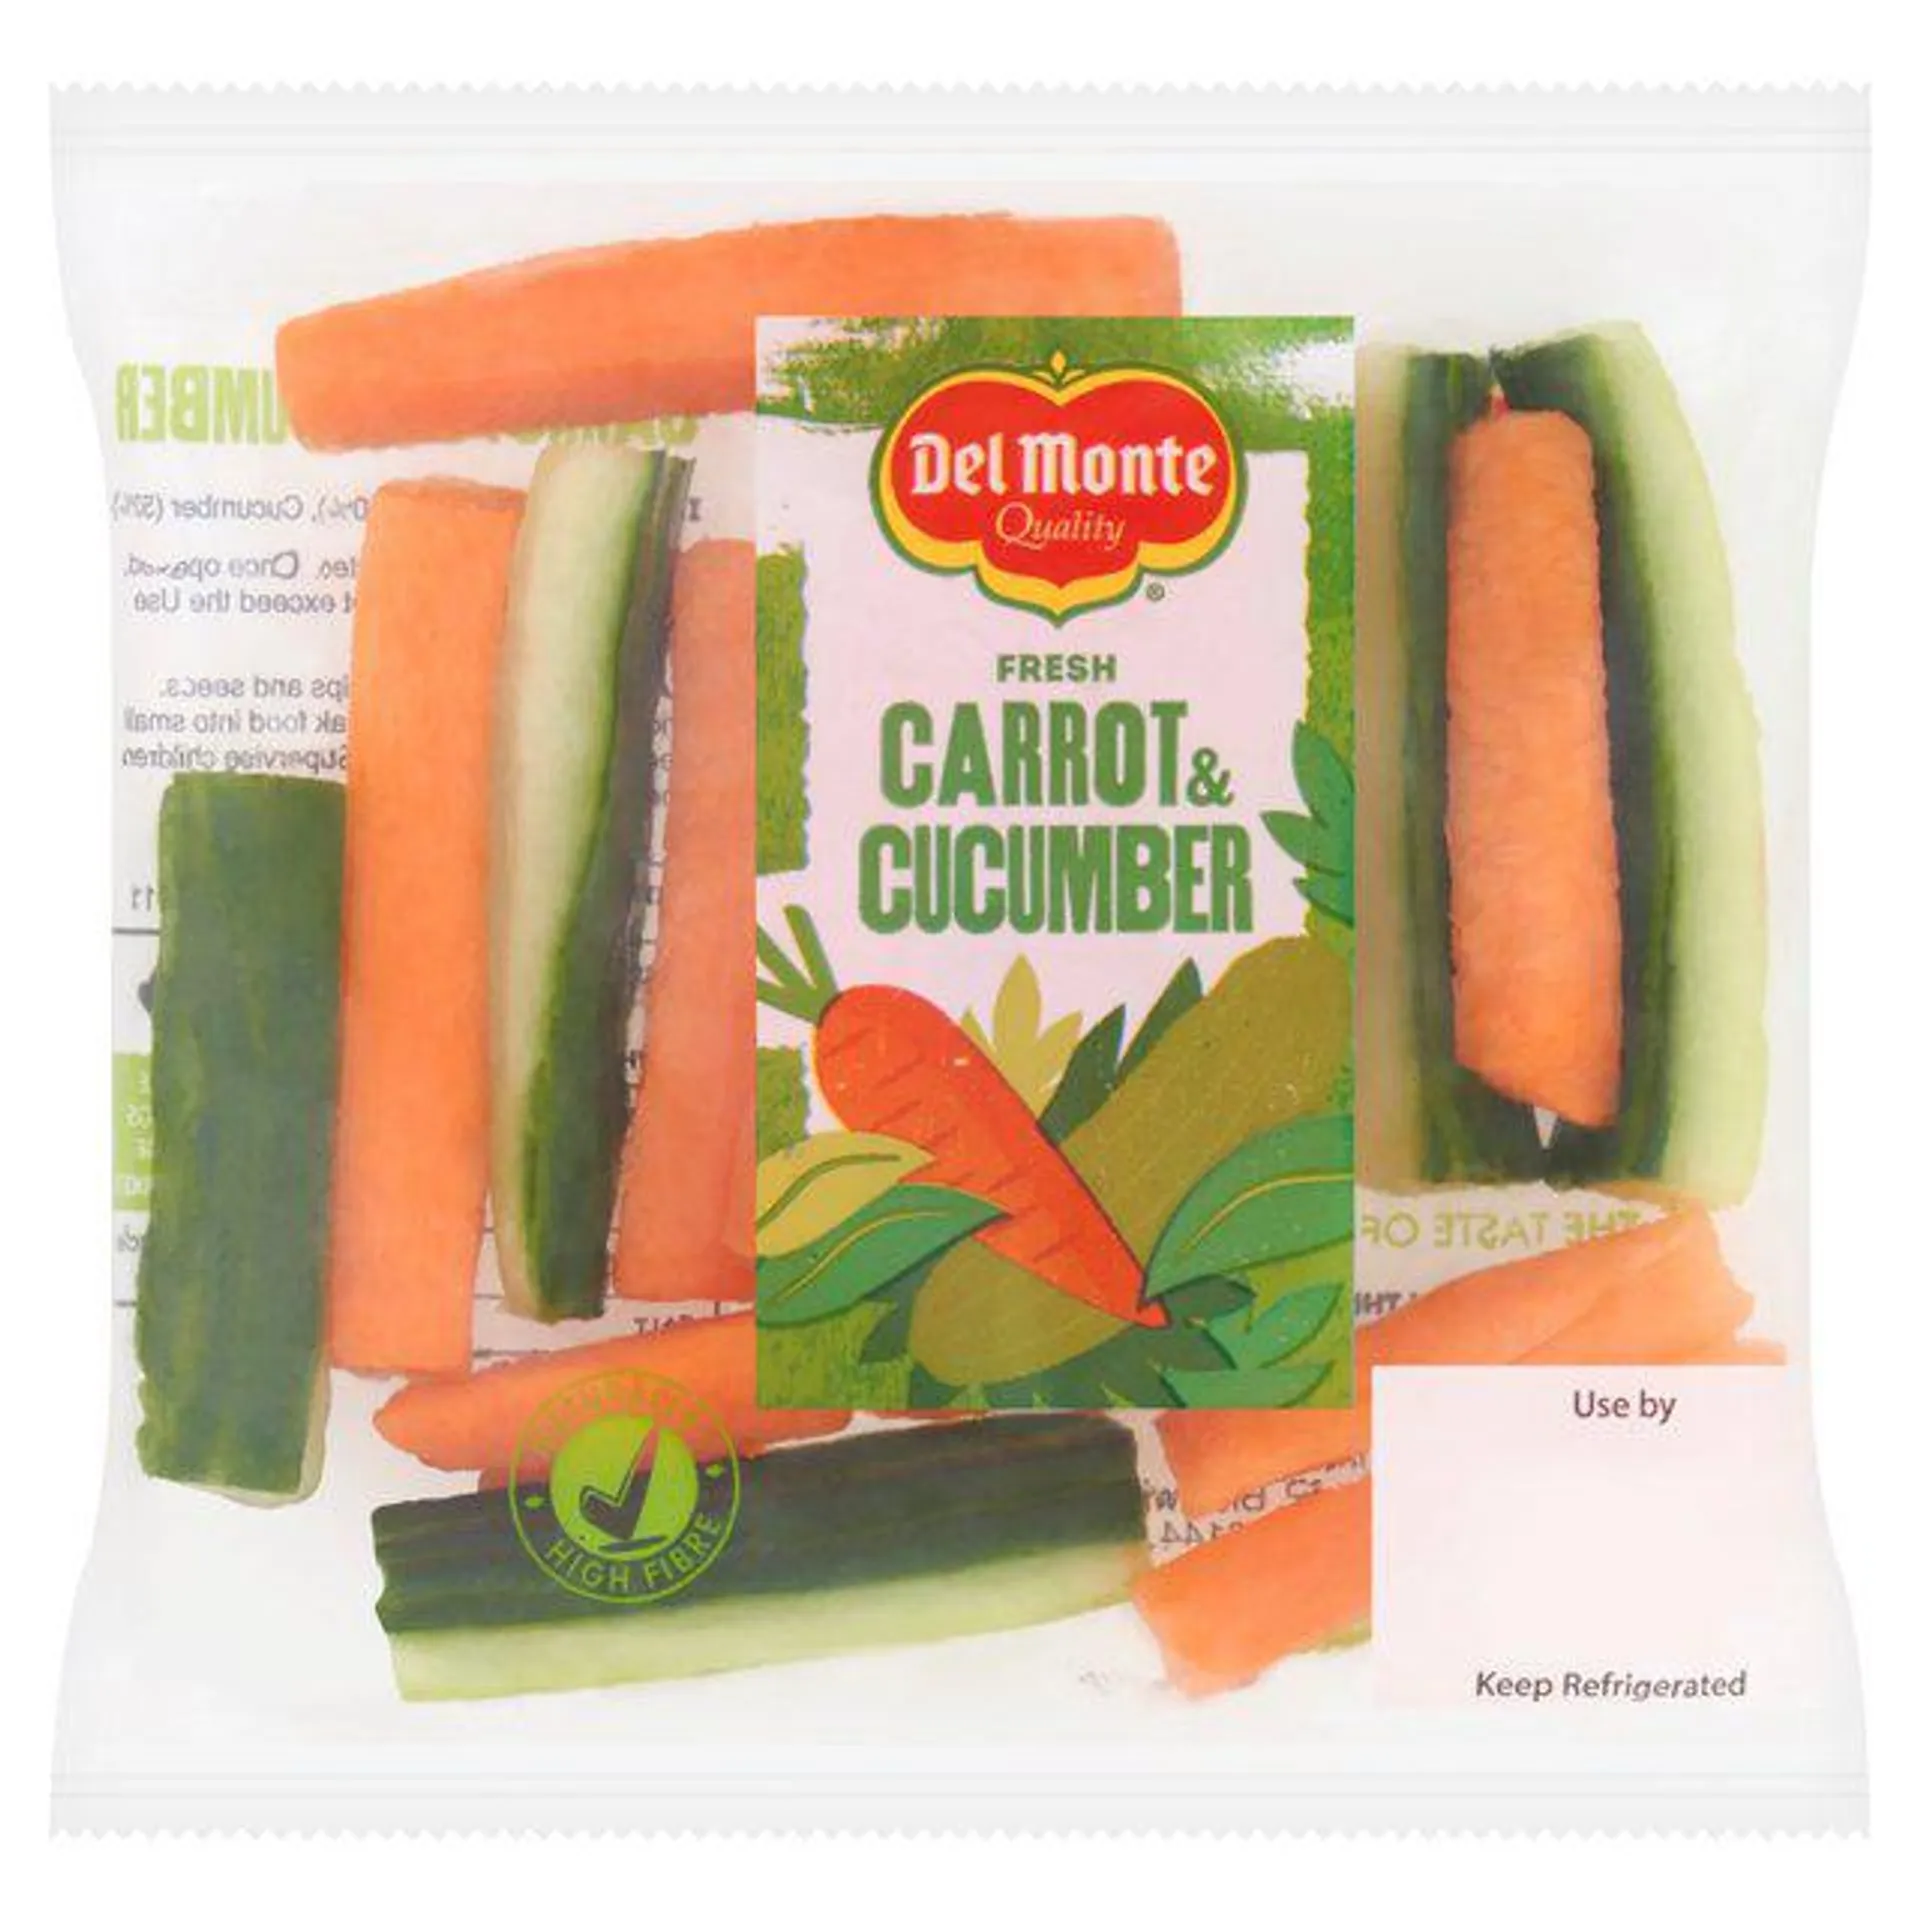 Del Monte Carrot & Cucumber 80g